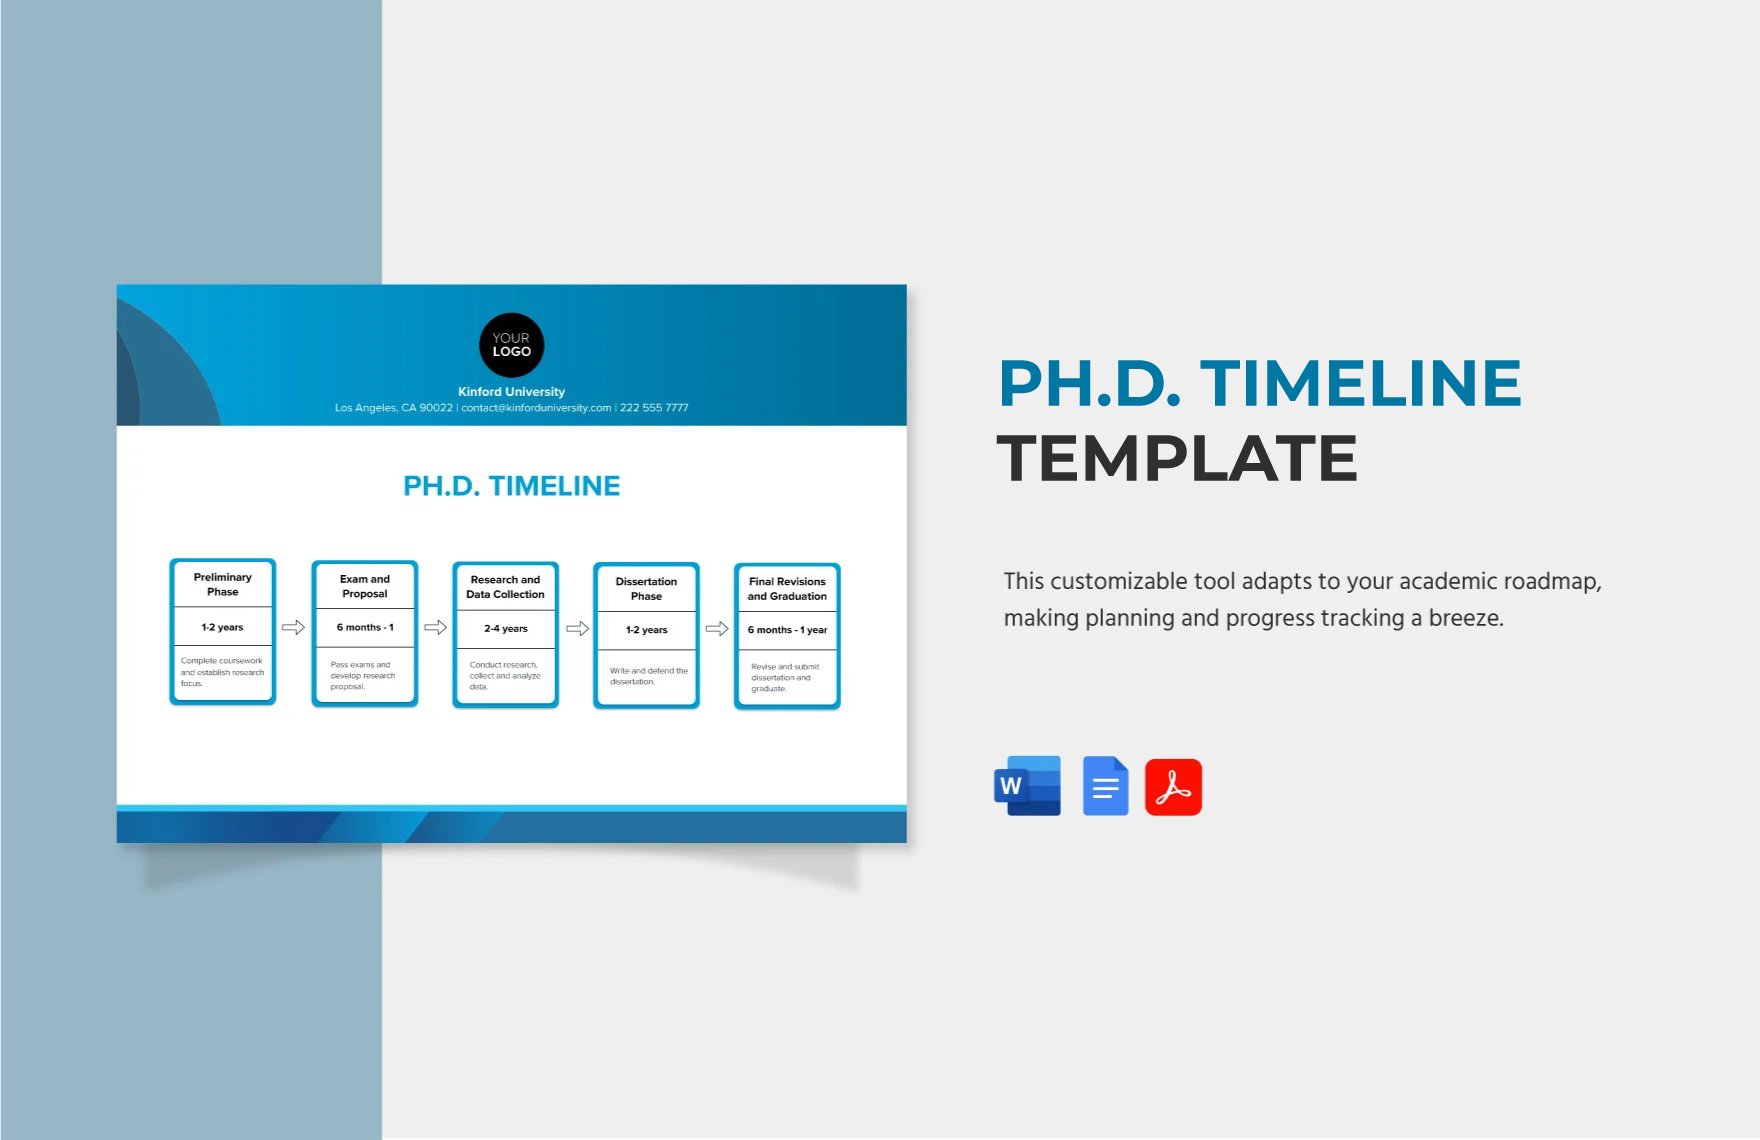 Ph.D. Timeline Template